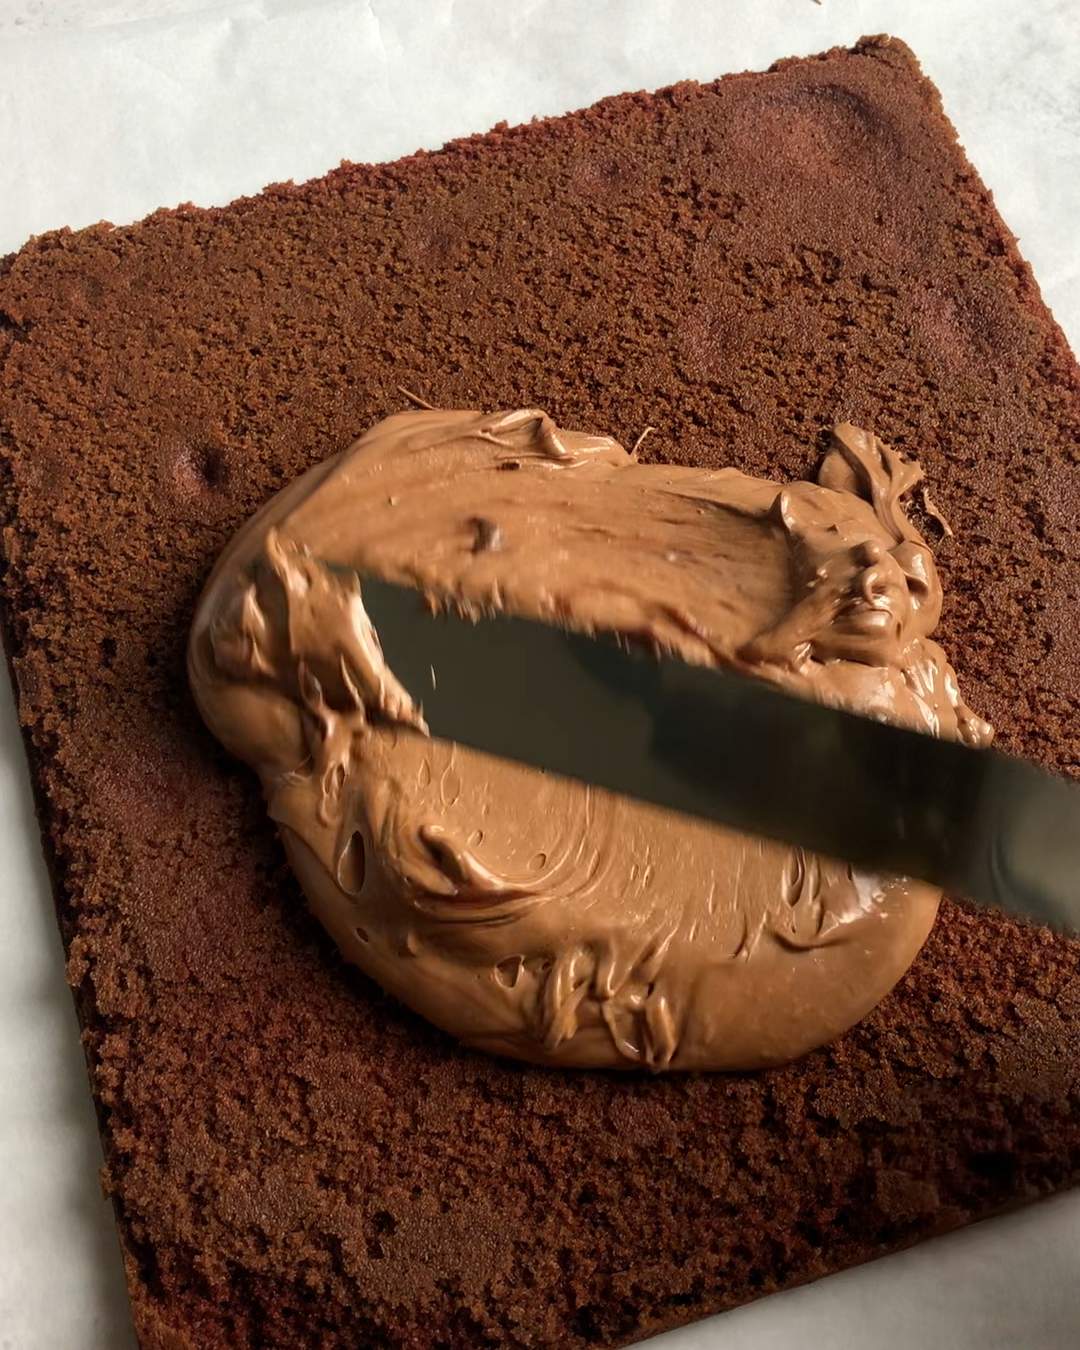 spreading vegan chocolate ganache across sponge cake